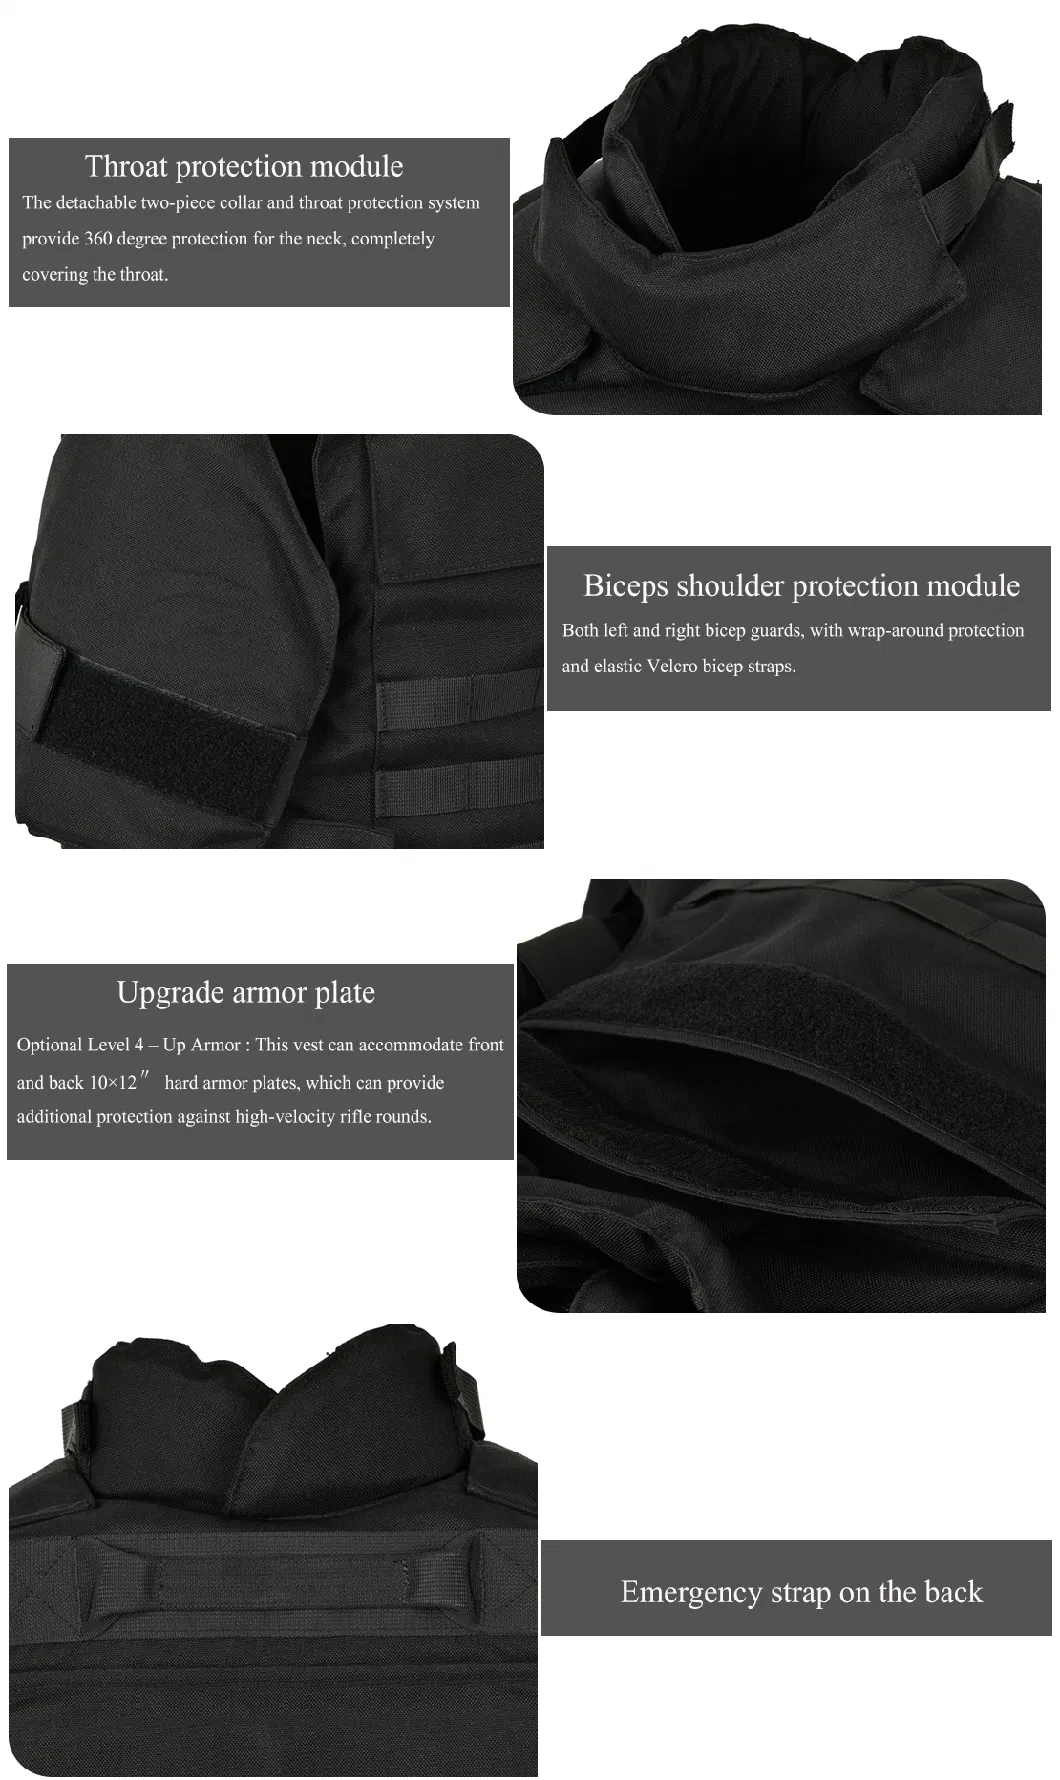 Modular Full Body Protective Bulletproof Clothing for Military and Police Operations Nij Iiia Bulletproof Vest